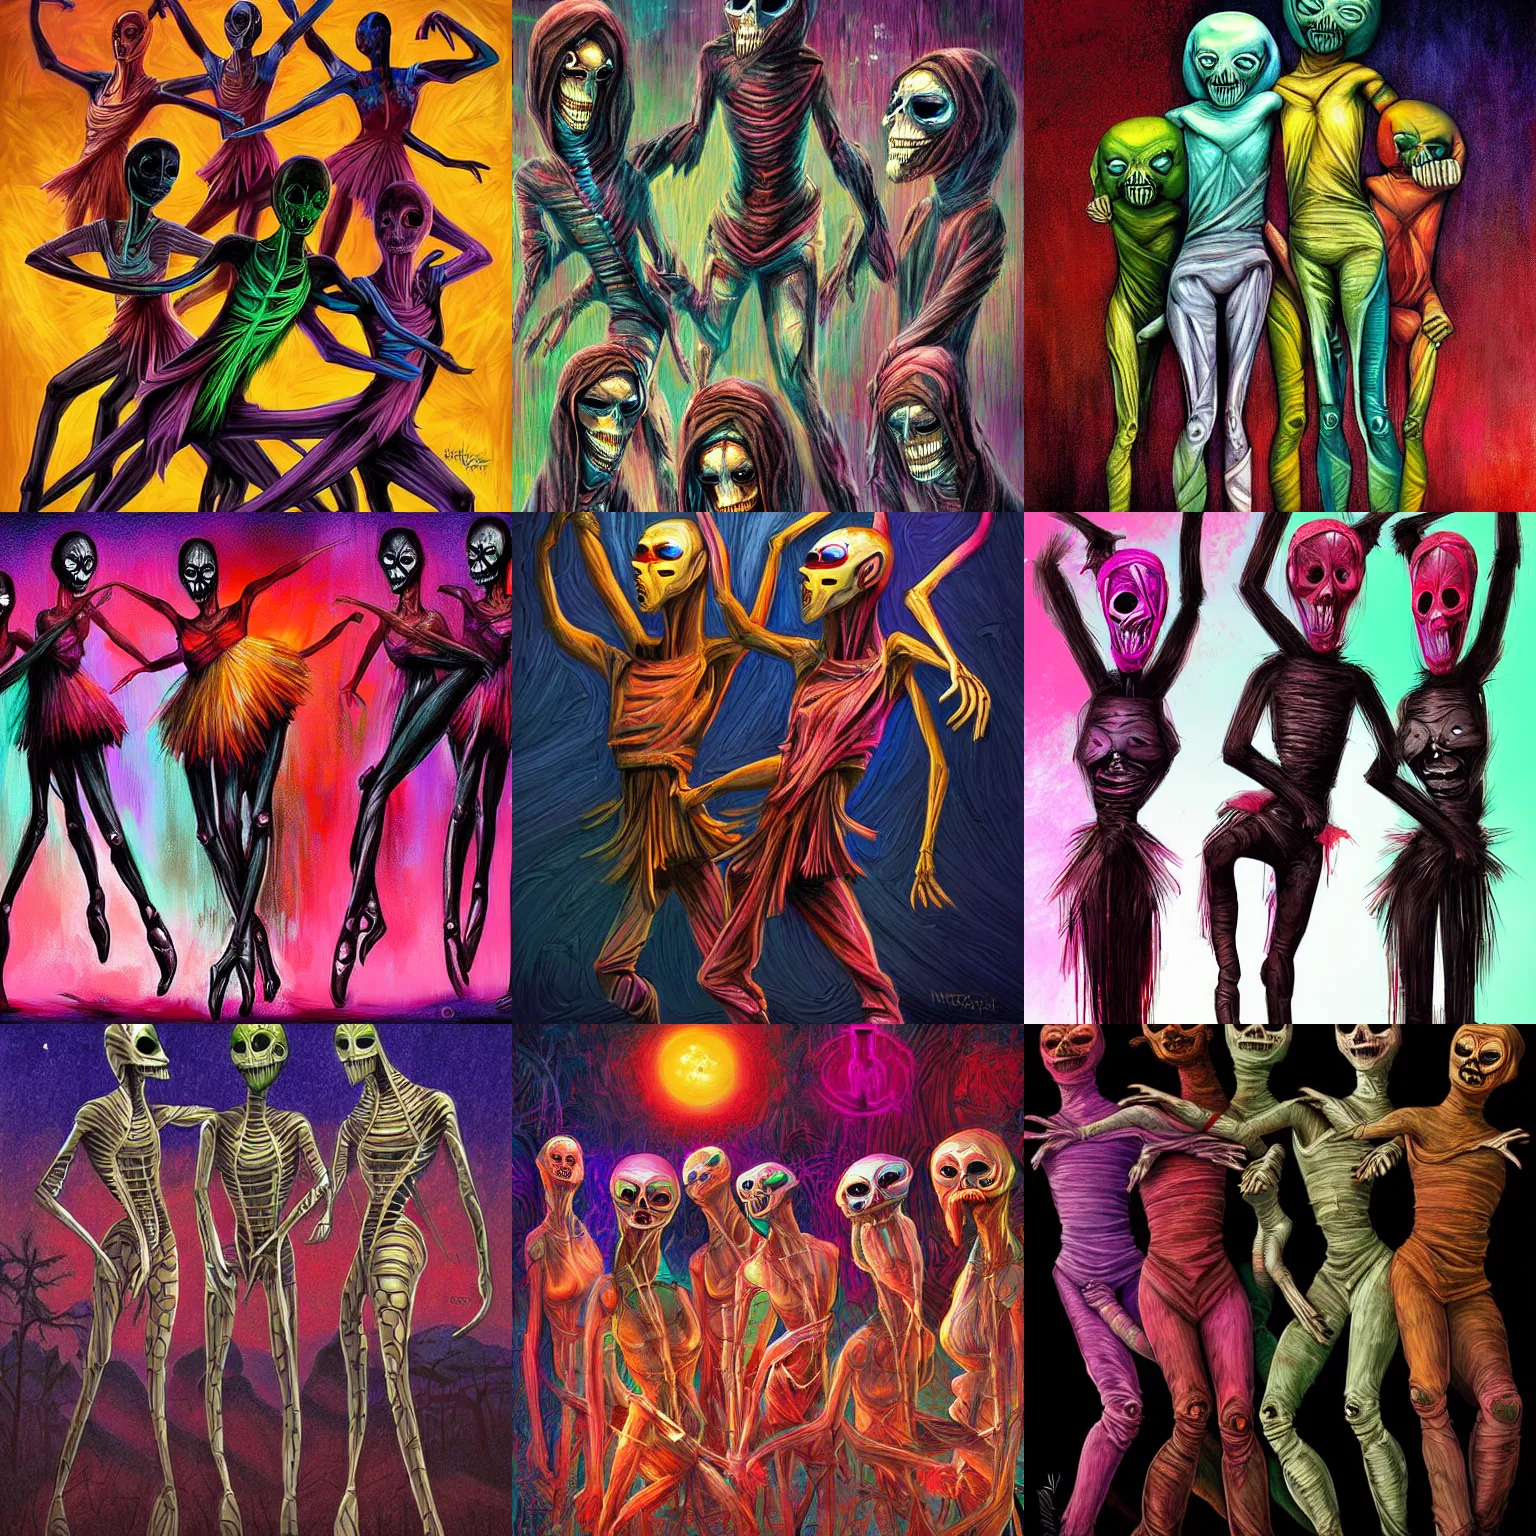 Prompt: ballet undead mummies, dark, vibrant, digital art, by magali villeneuve